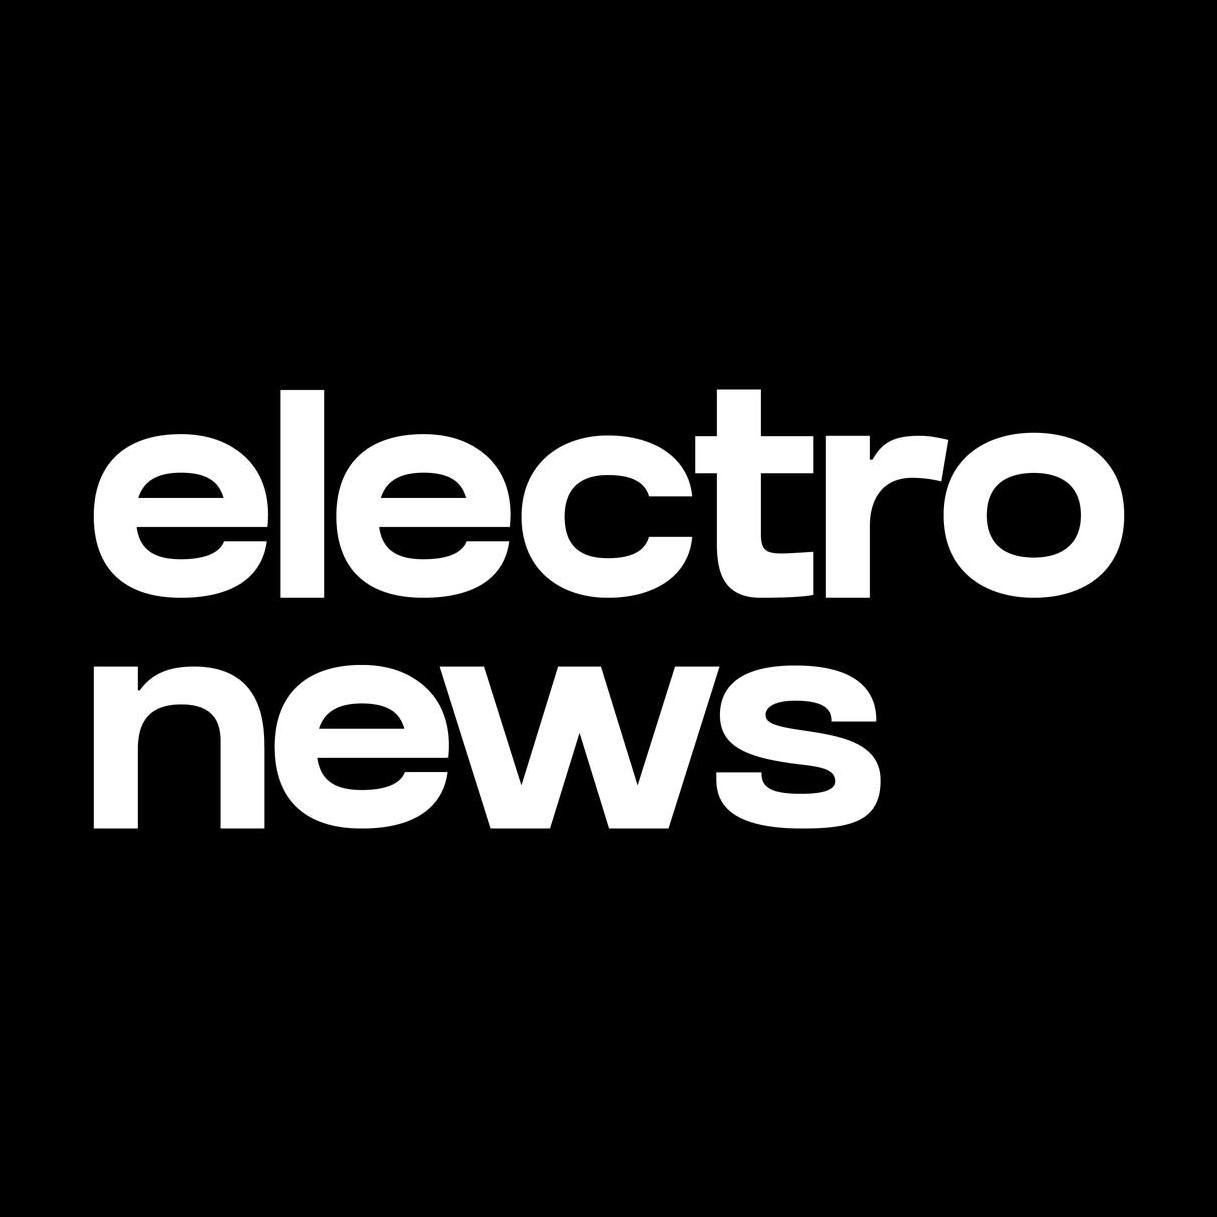 Electro News